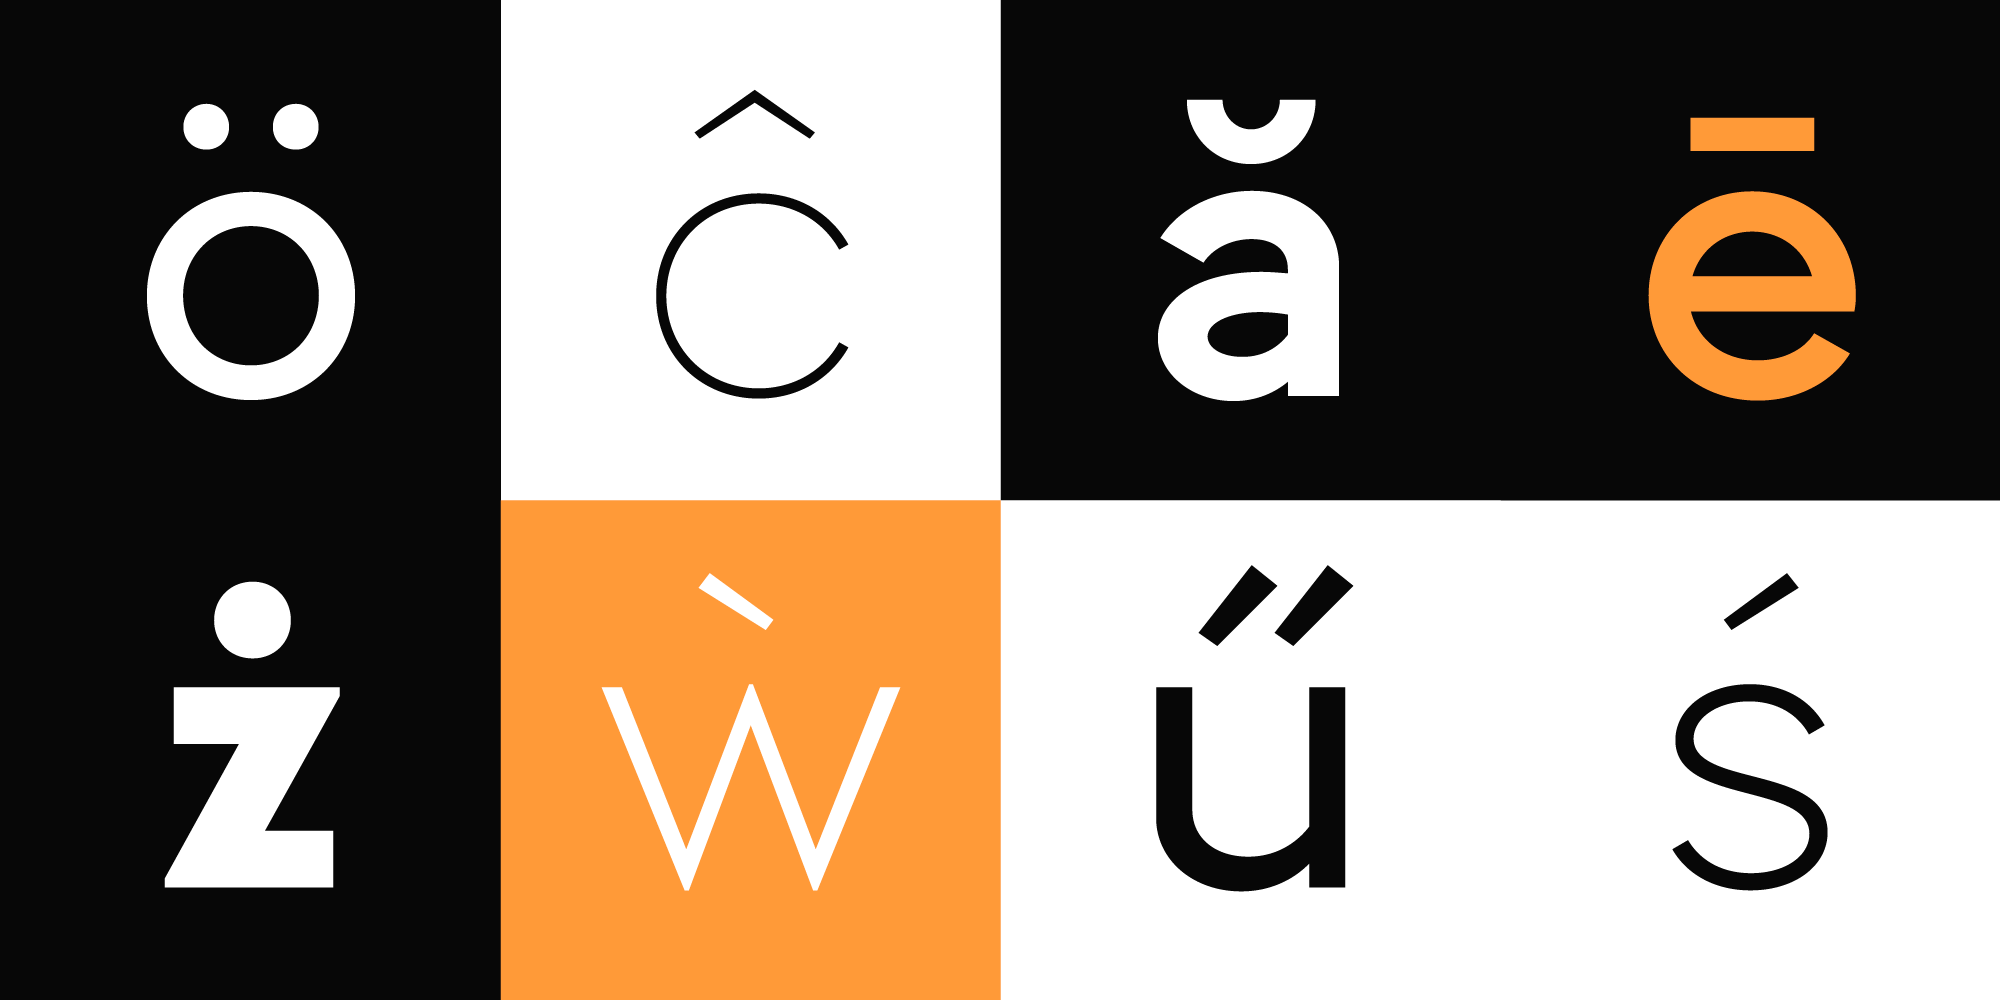 Geraldton Typeface